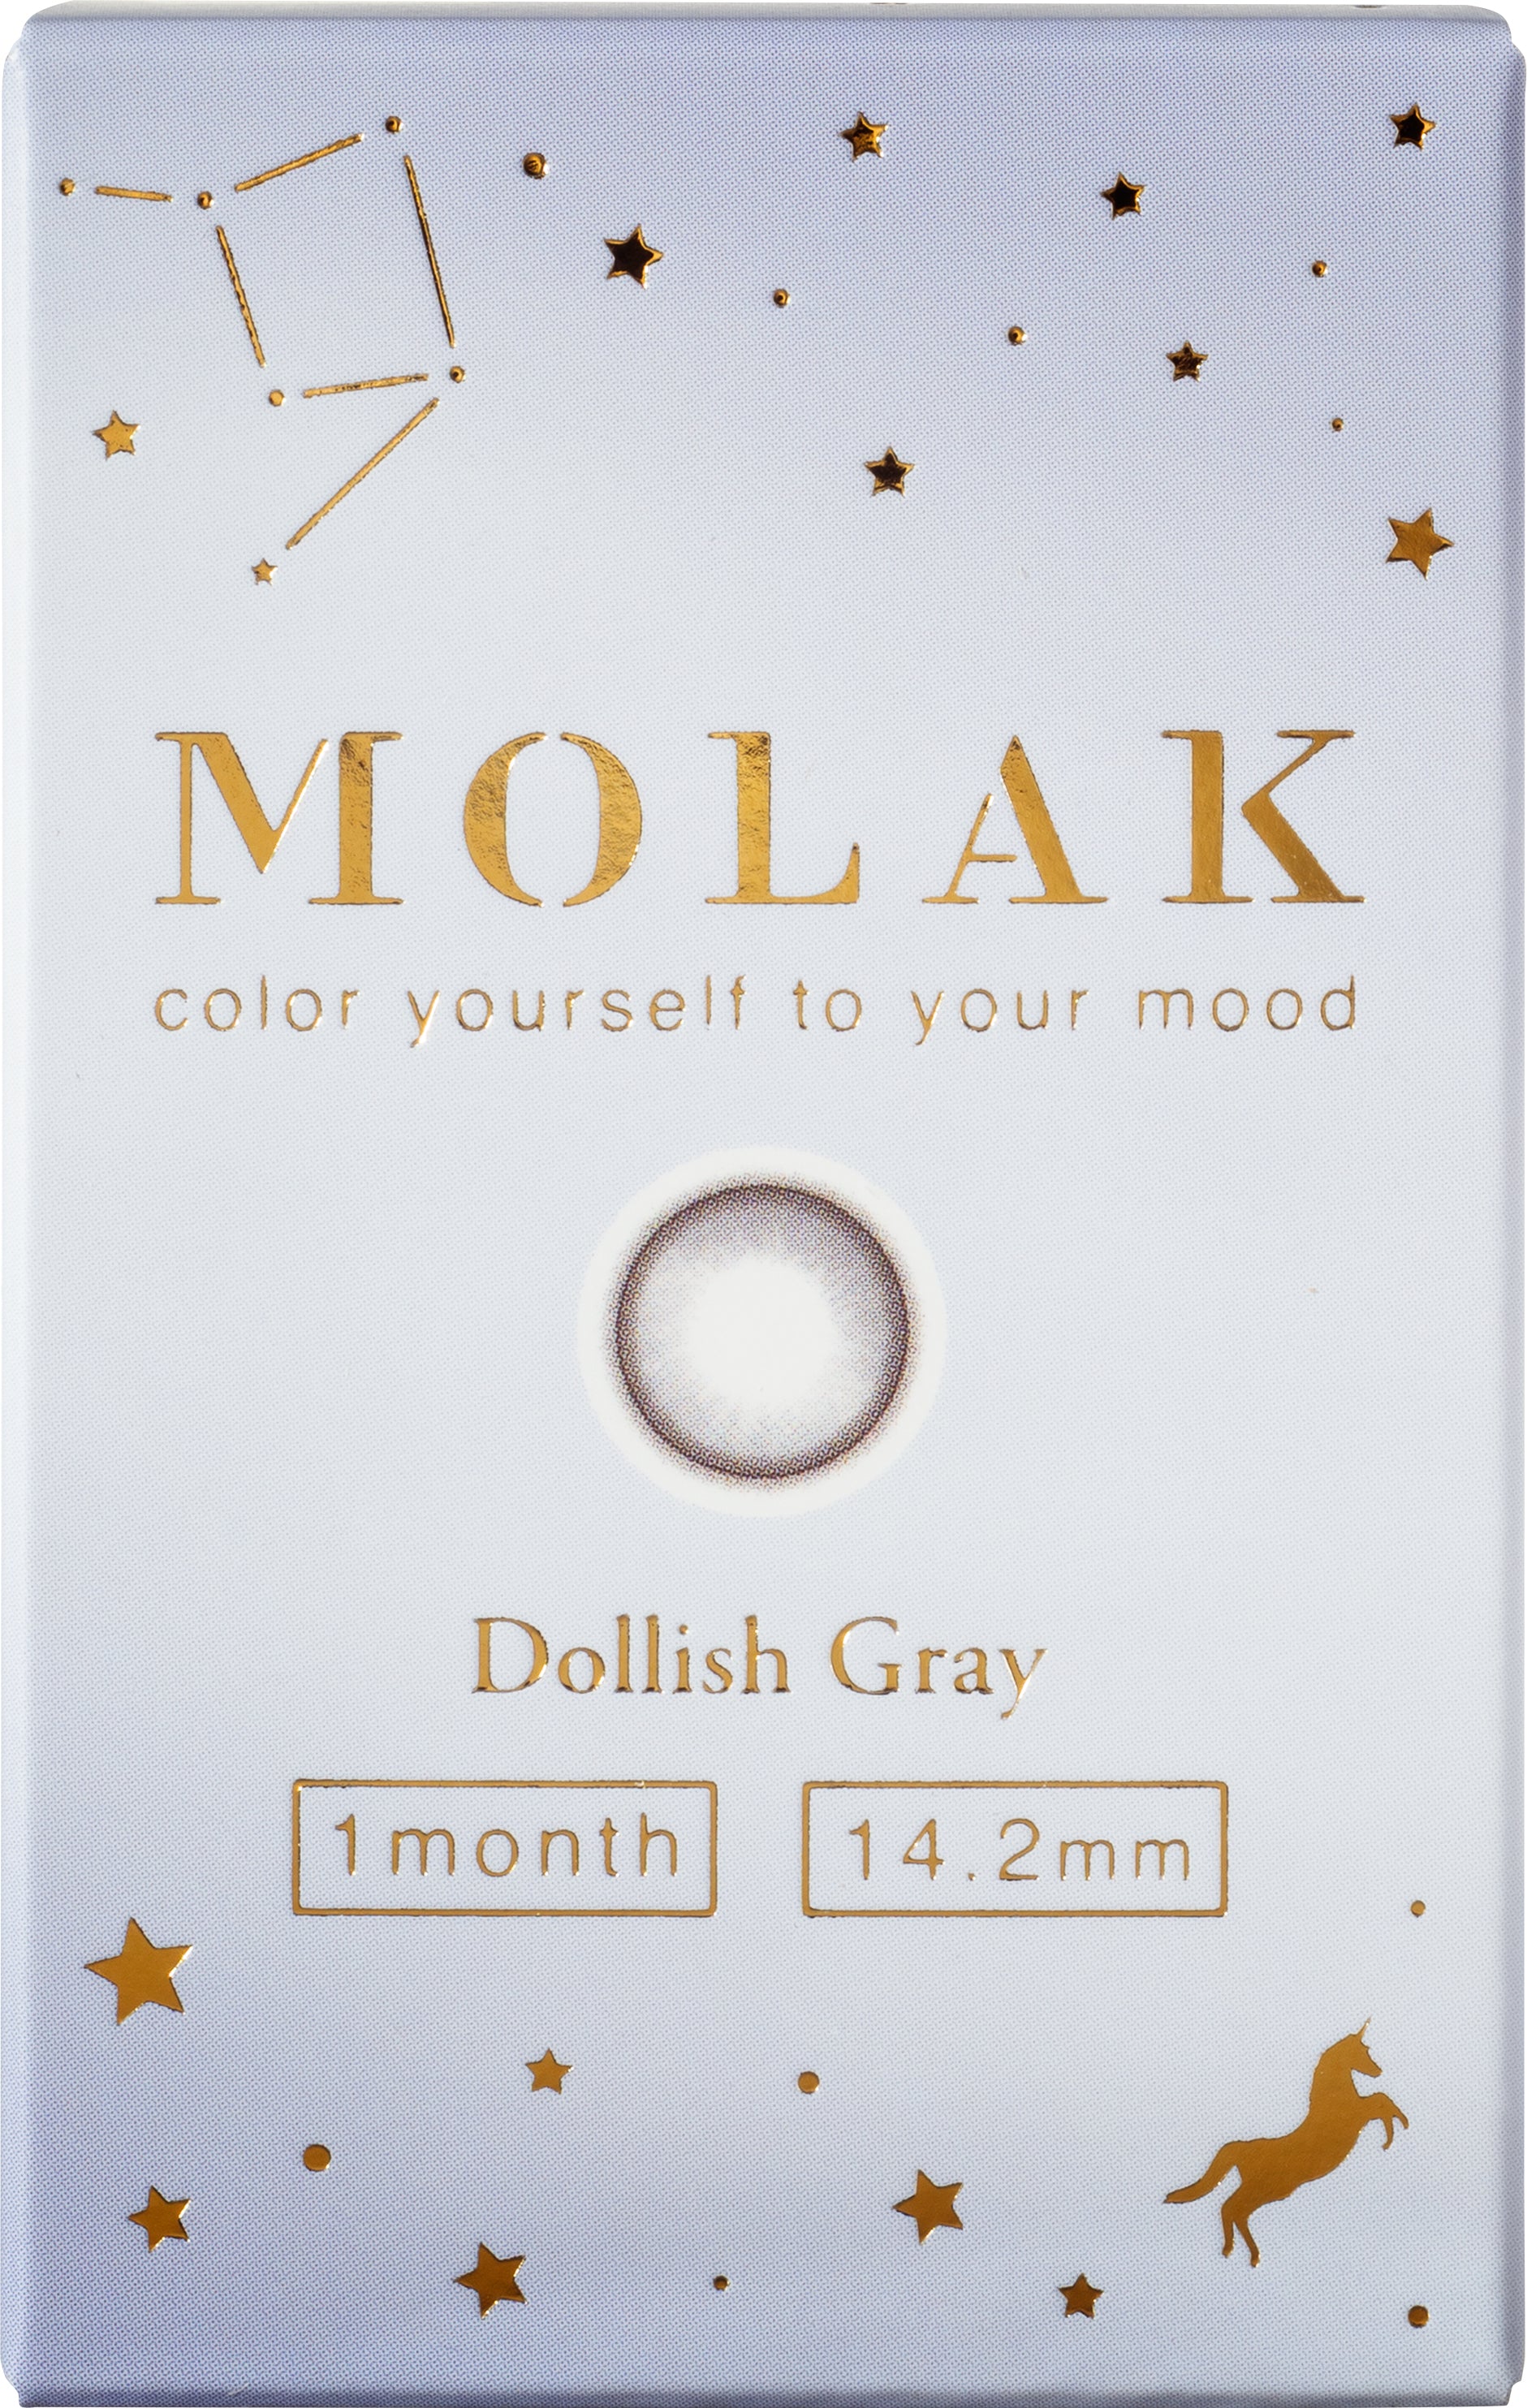 Dollish Gray | 1month